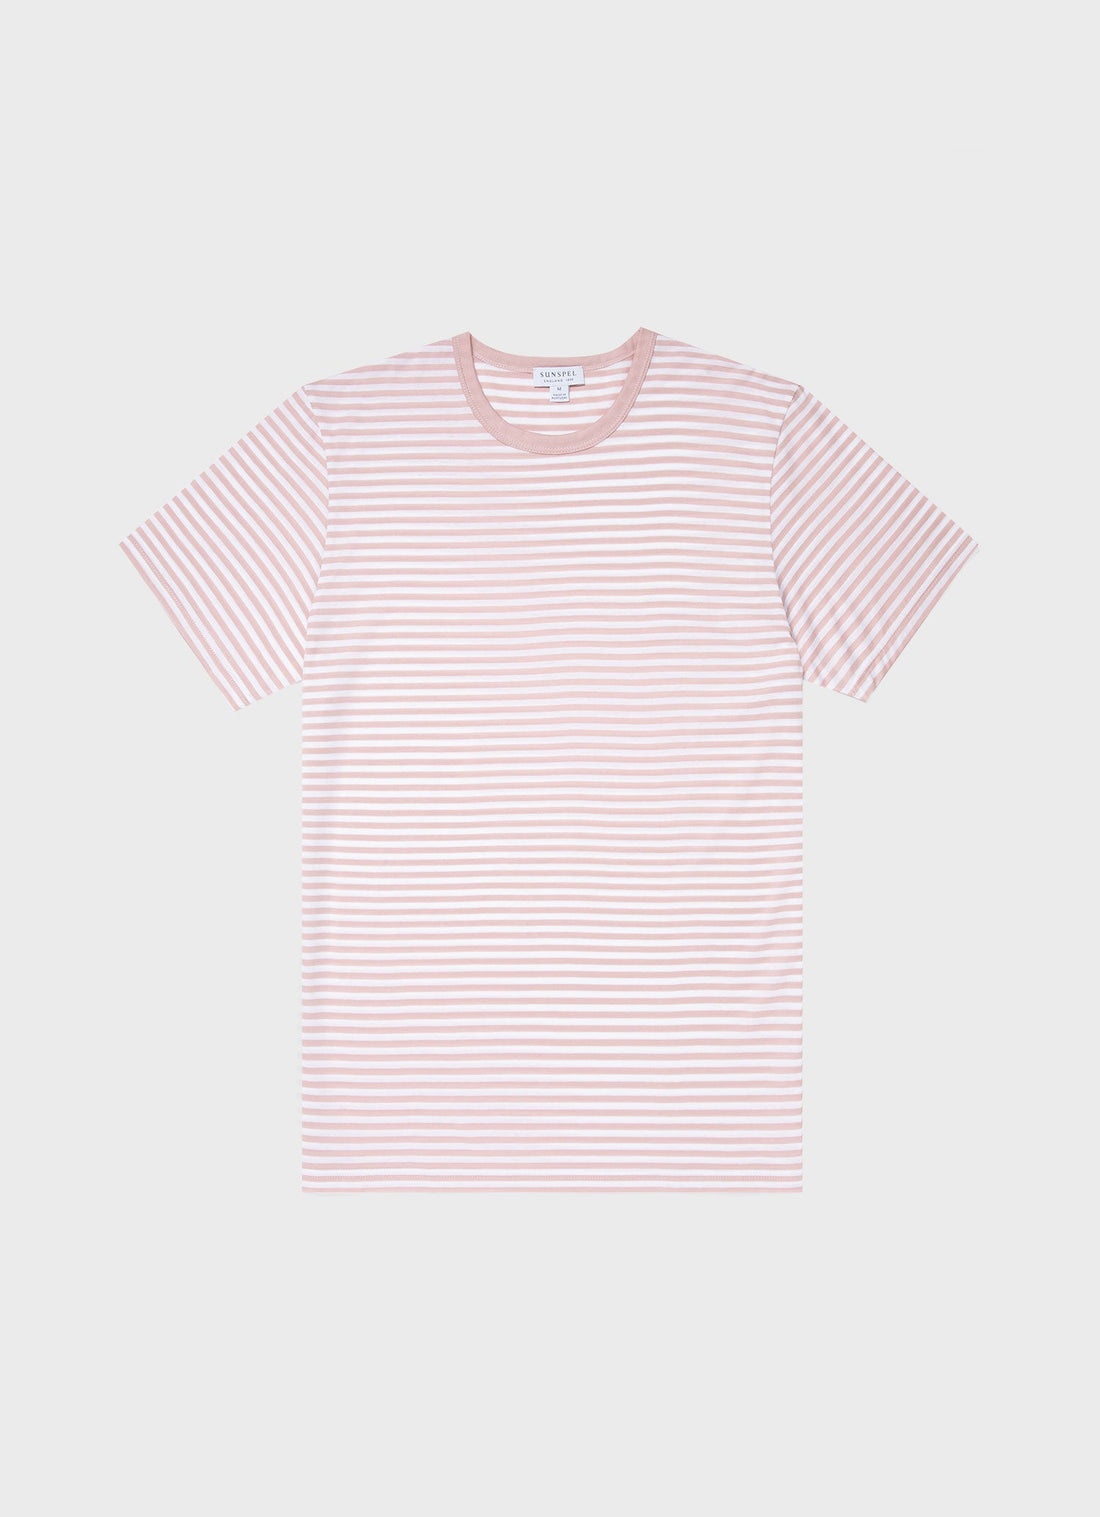 Men's Classic T-shirt in Shell Pink/White English Stripe